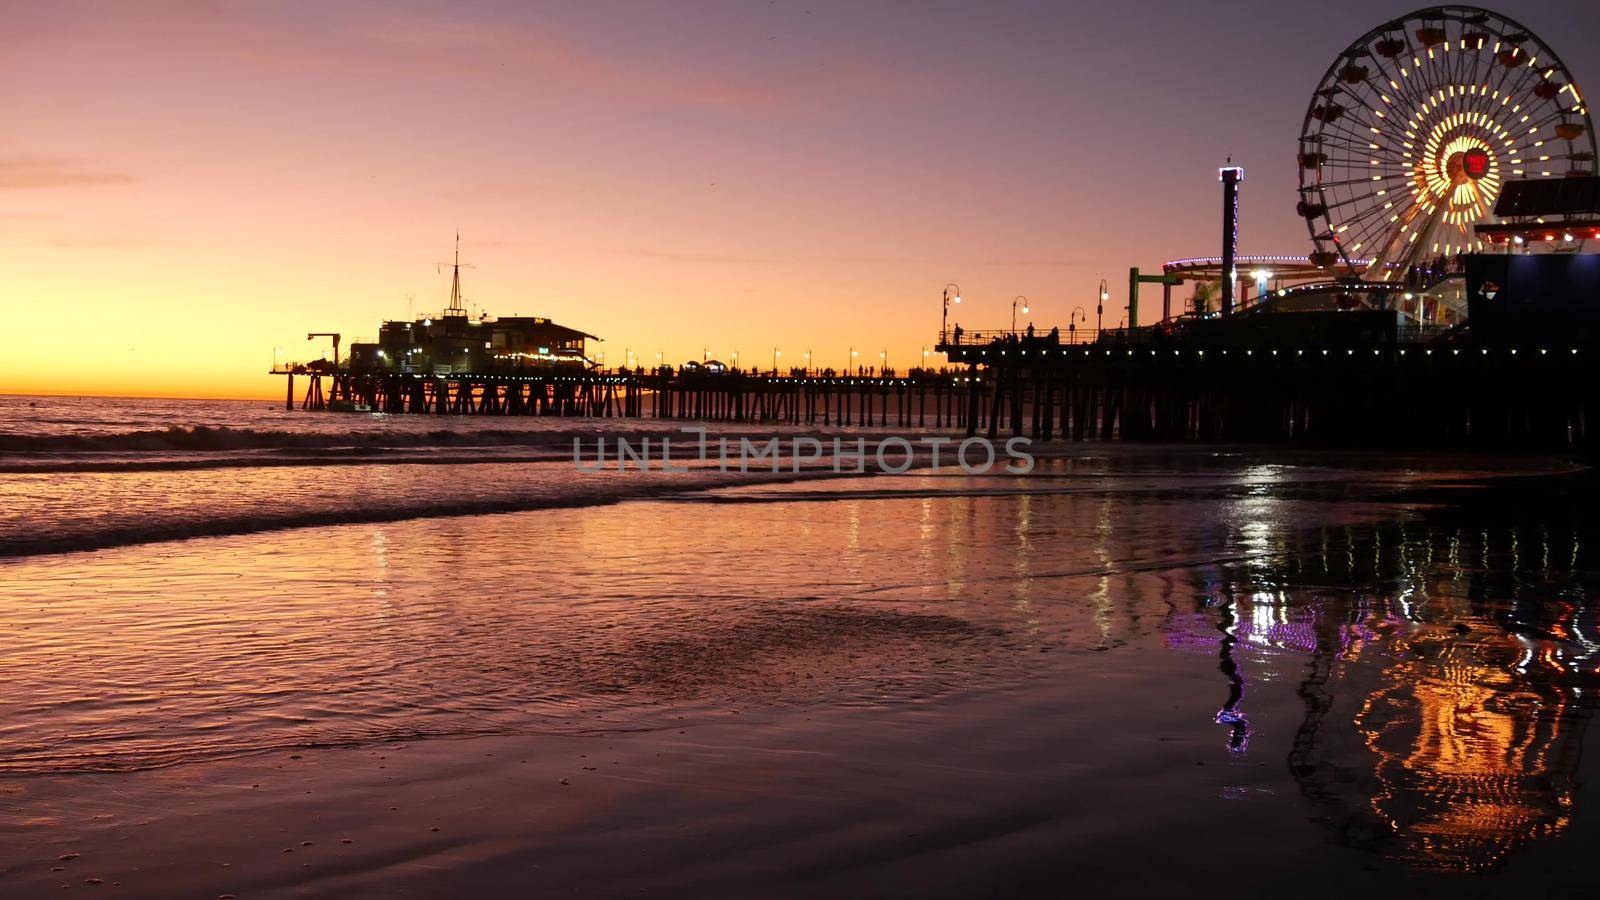 Twilight waves against classic illuminated ferris wheel, amusement park on pier in Santa Monica pacific ocean beach resort. Summertime iconic symbol of California glowing in dusk, Los Angeles, CA USA. by DogoraSun